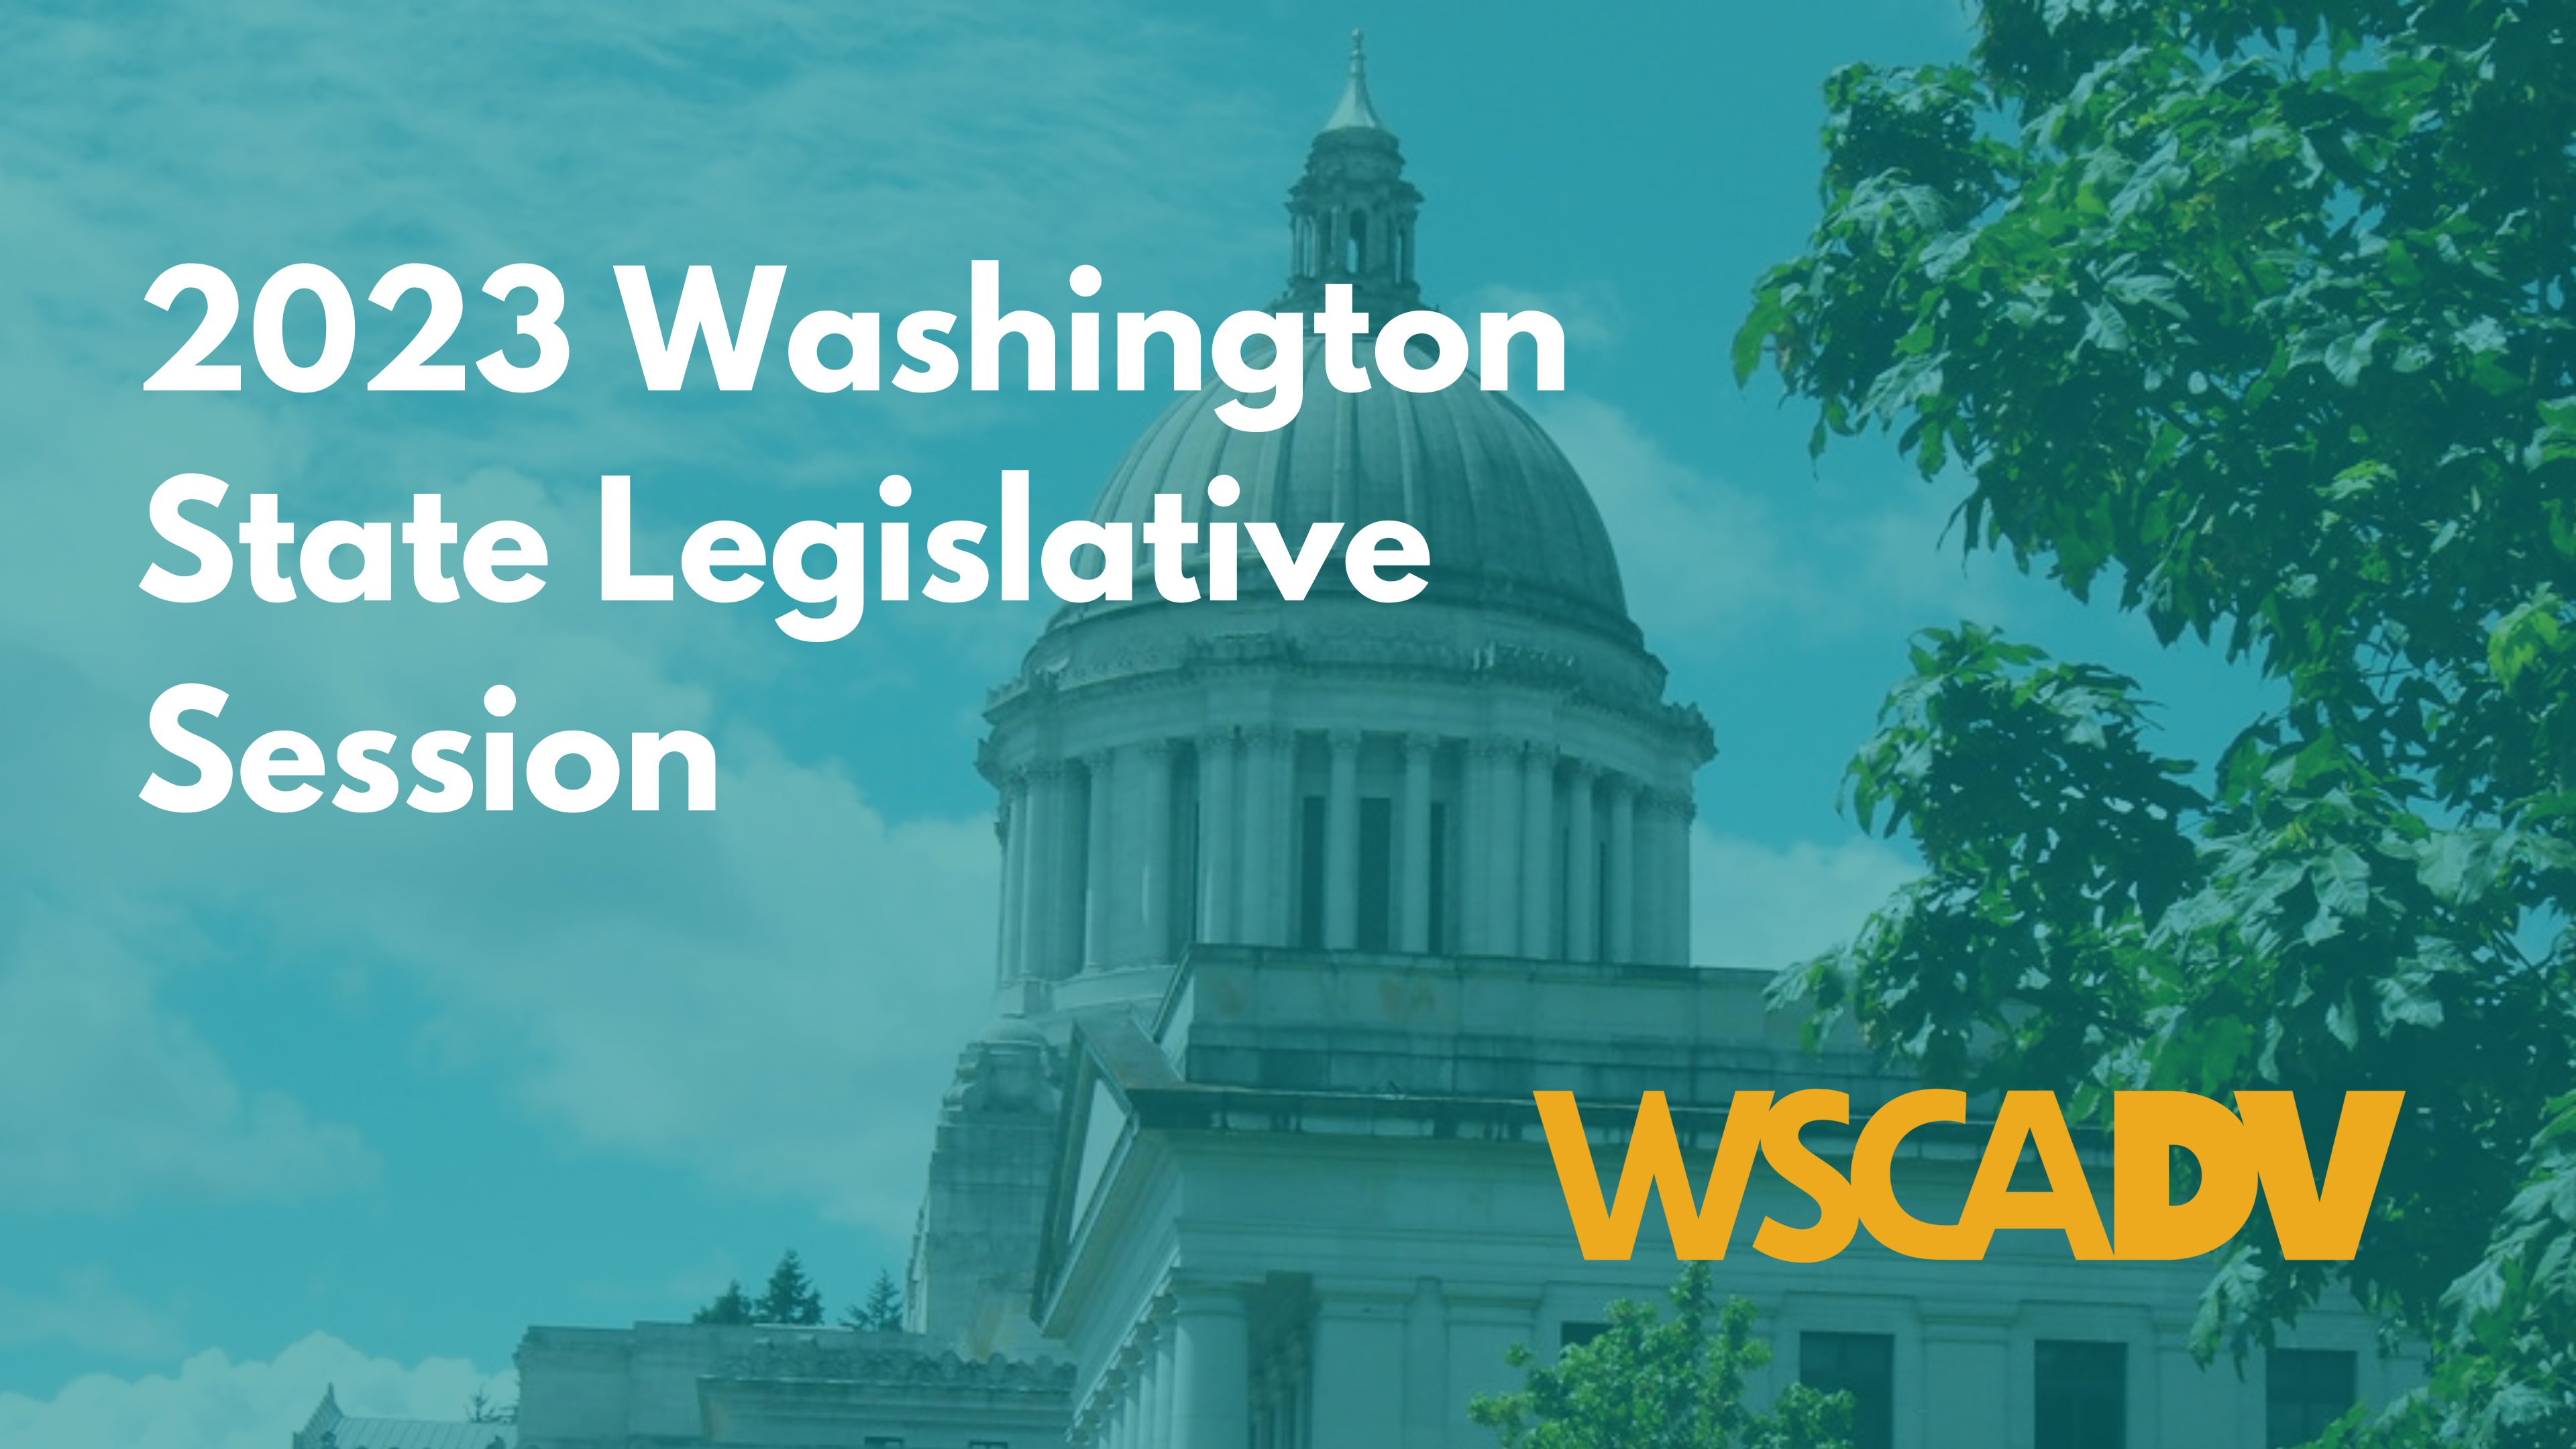 Prepare for the 2023 Washington State Legislative Session with our Guide!